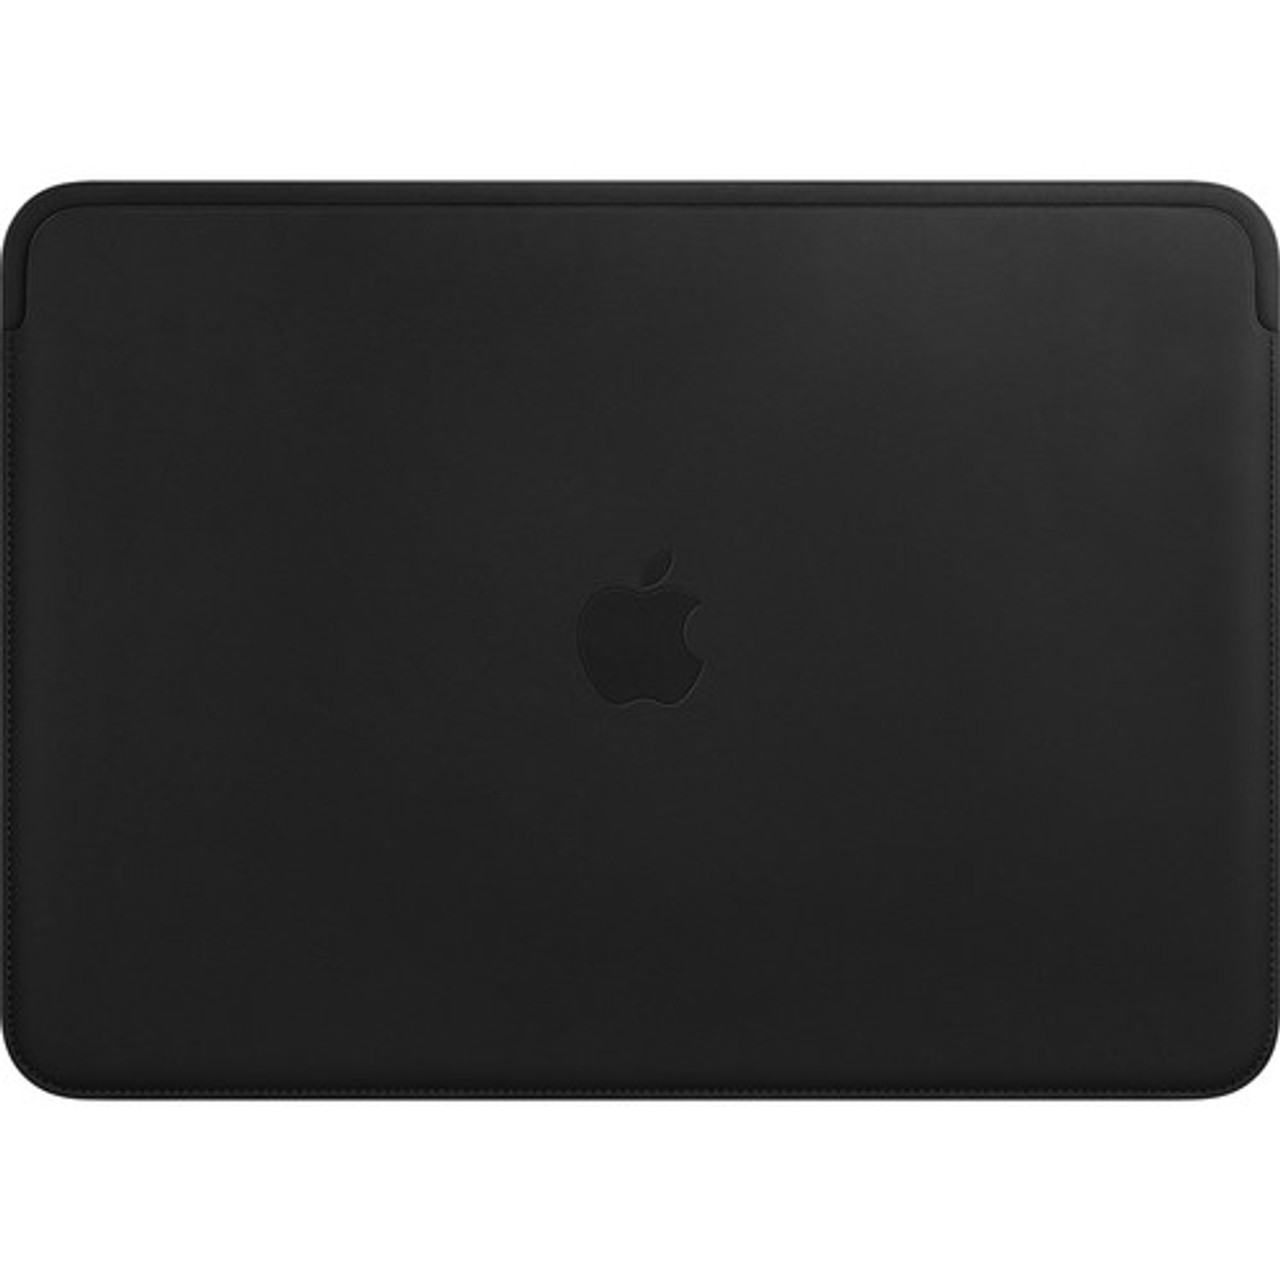 APPLE MacBook Air/Pro Leather Sleeve